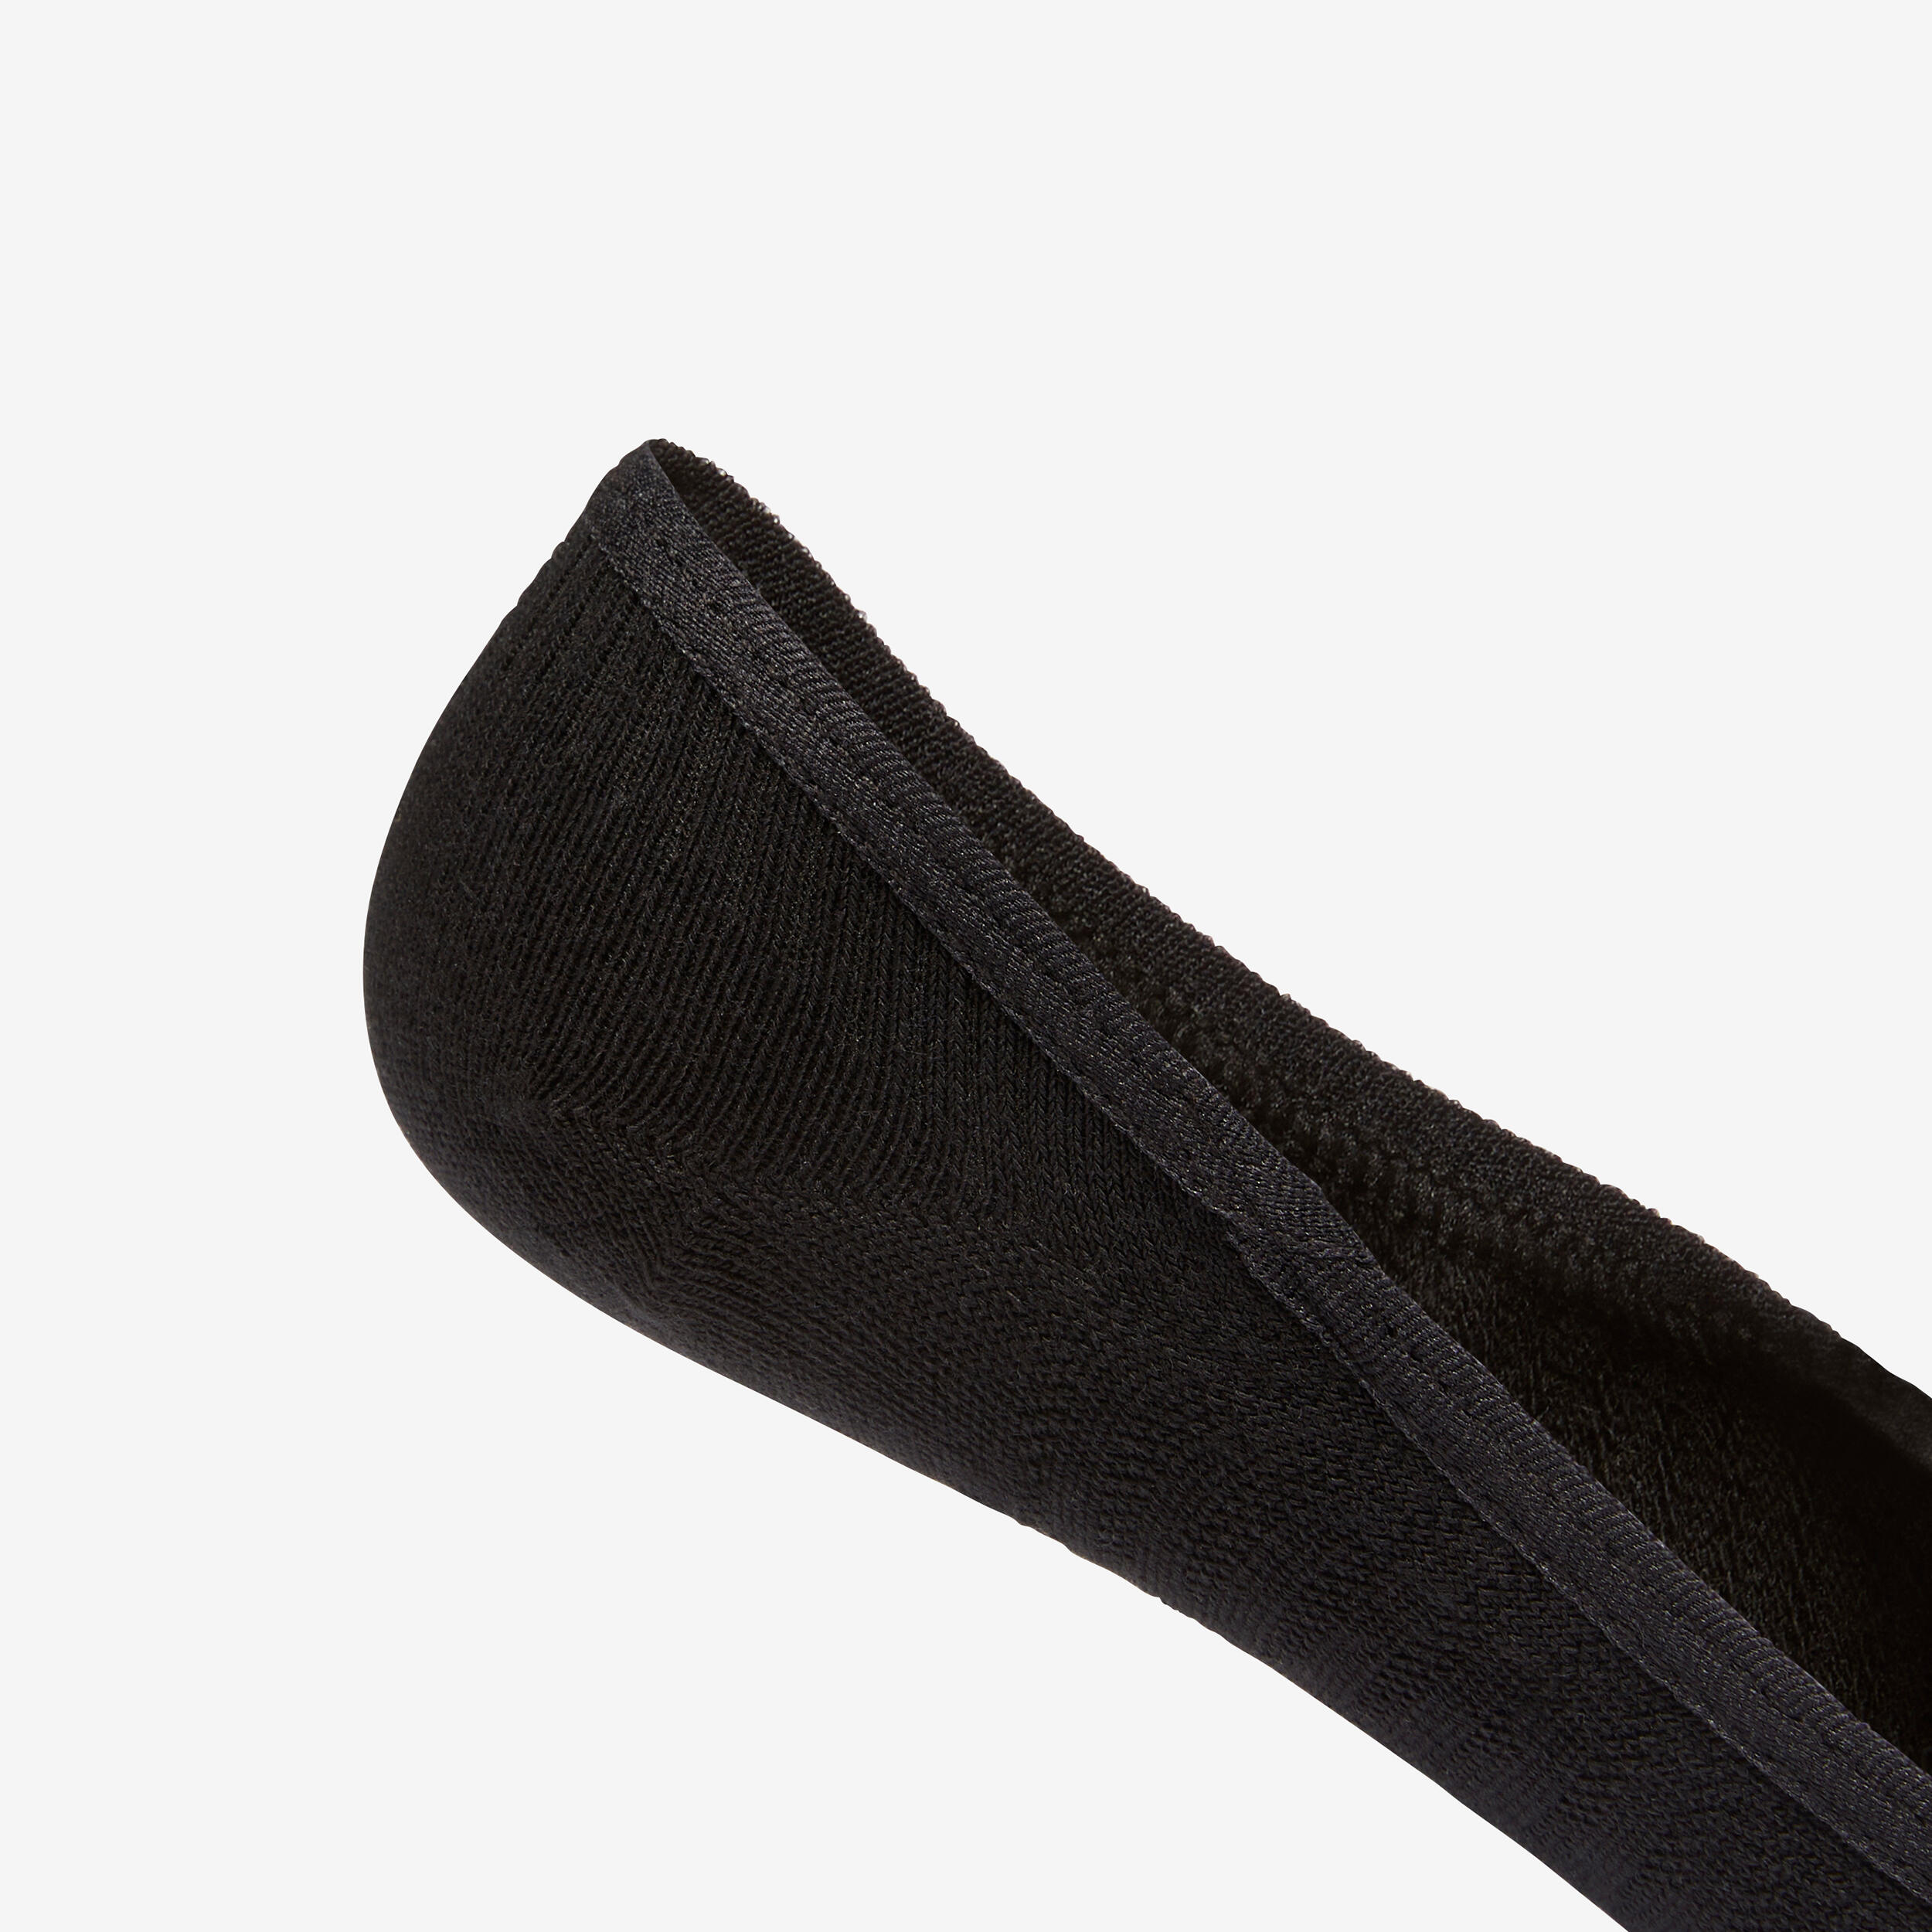 Low Ballerina Socks - Deocell Tech URBAN WALK pack of 2 pairs - black 5/5